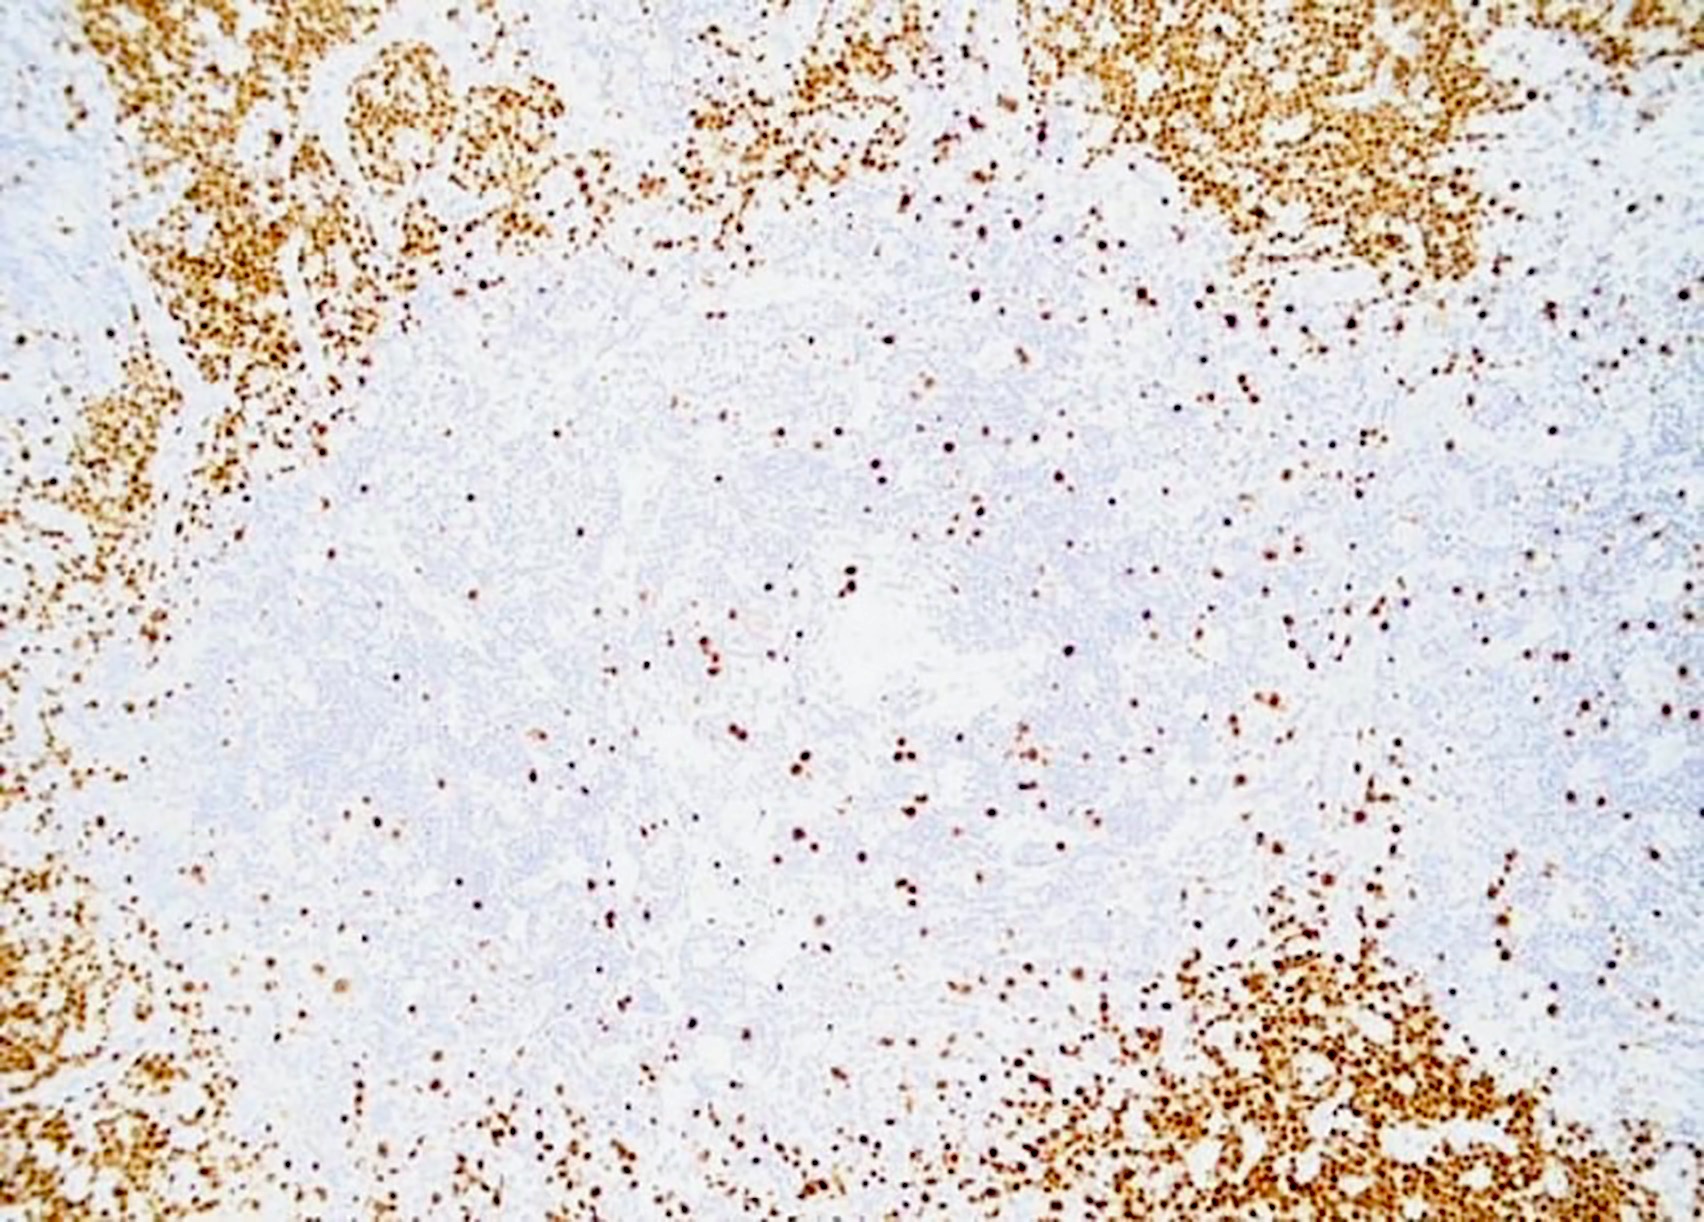 Kaposi sarcoma in a case of HHV8 MCD, MUM